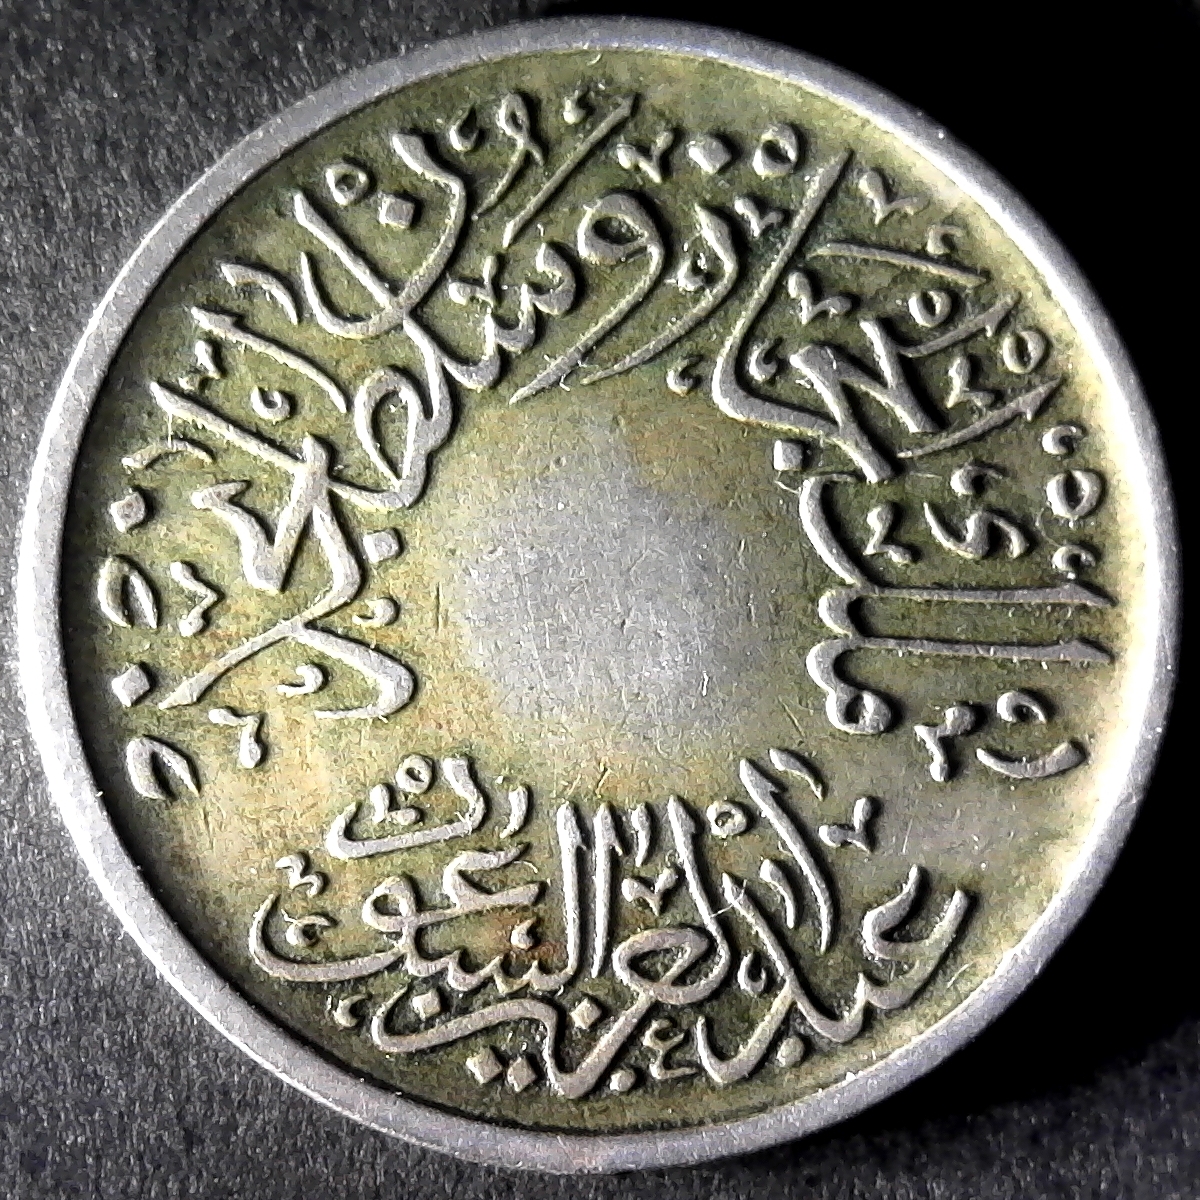 Kingdom of Hejaz and Sultanate of Nejd 1 Girish 1925 rev.jpg